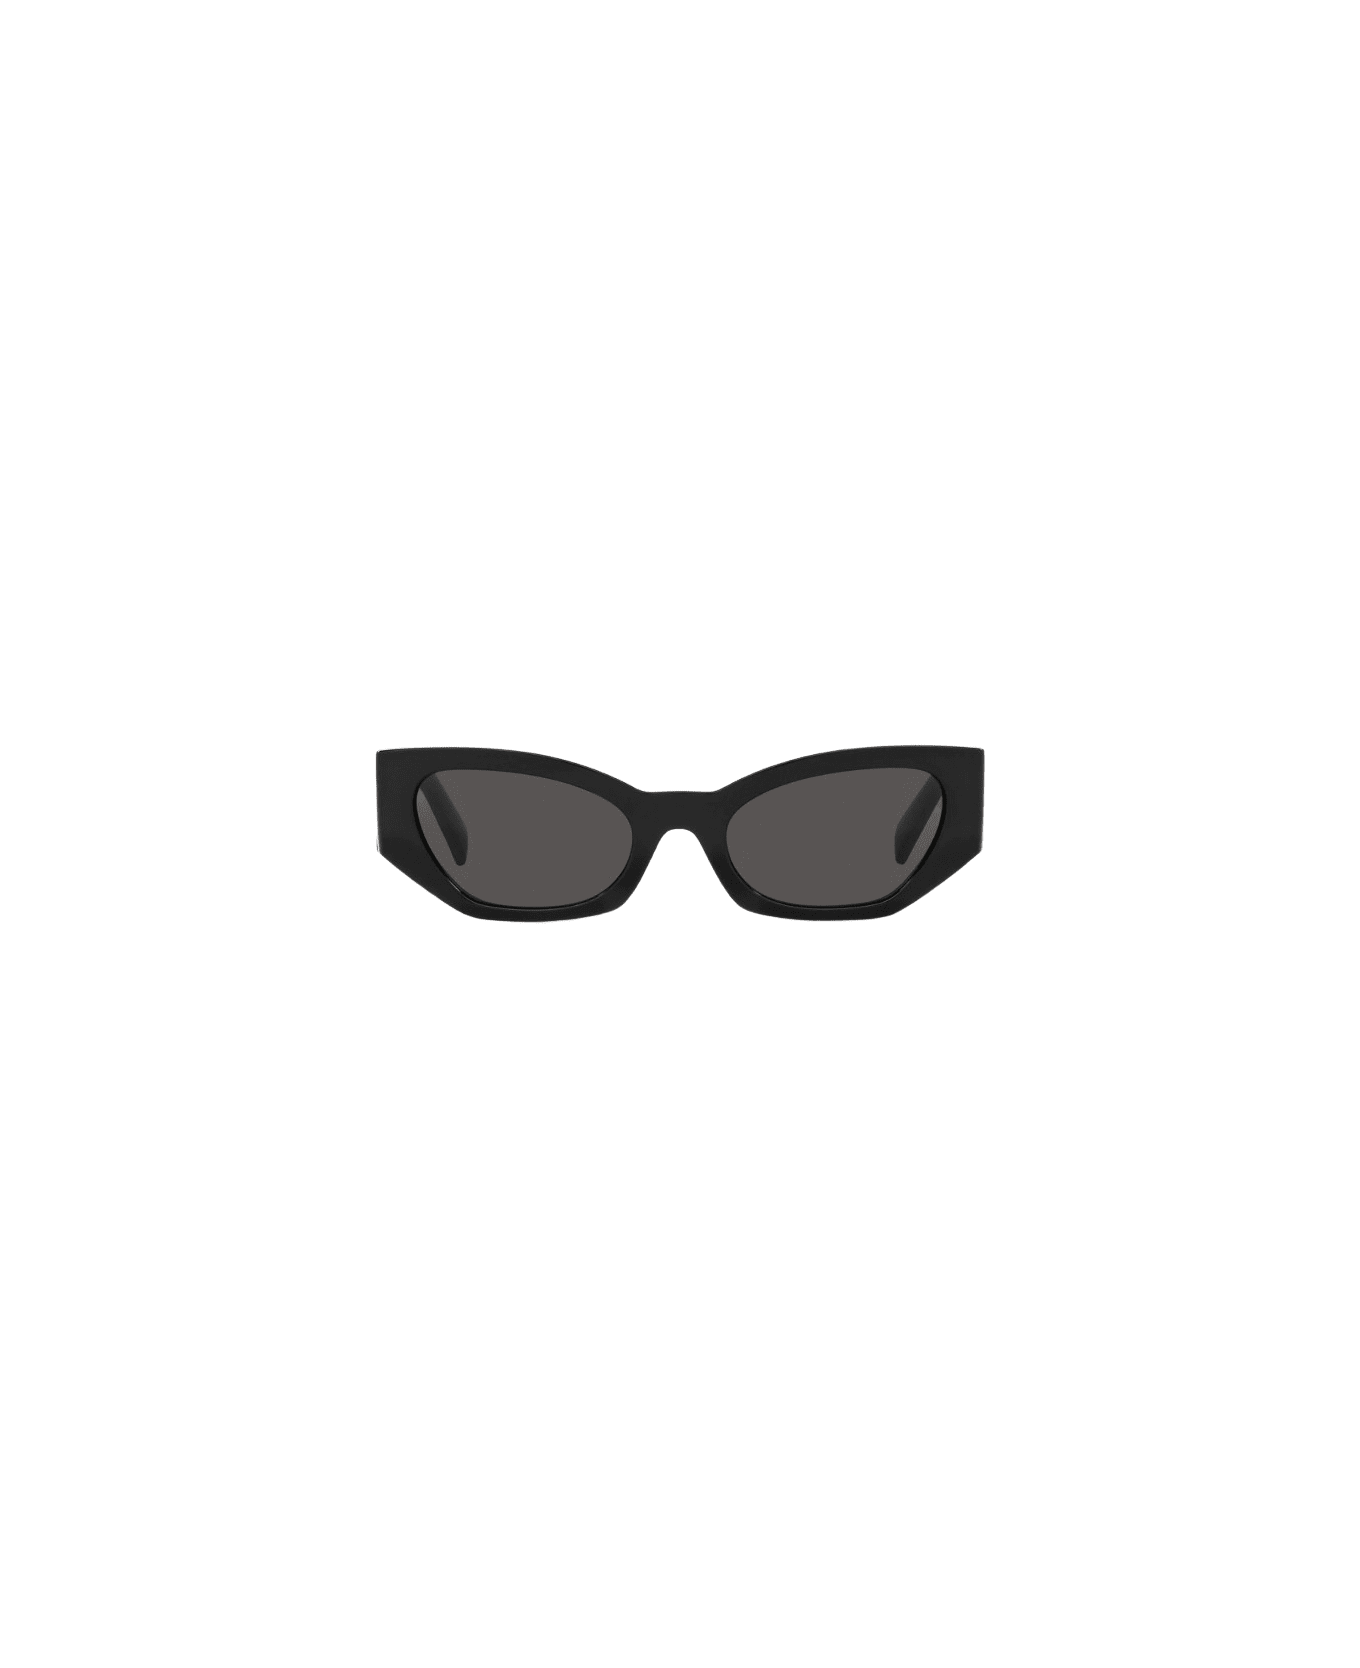 wayfarer-frame sunglasses Nero Eyewear DG6186s 501/87 Sunglasses - Nero